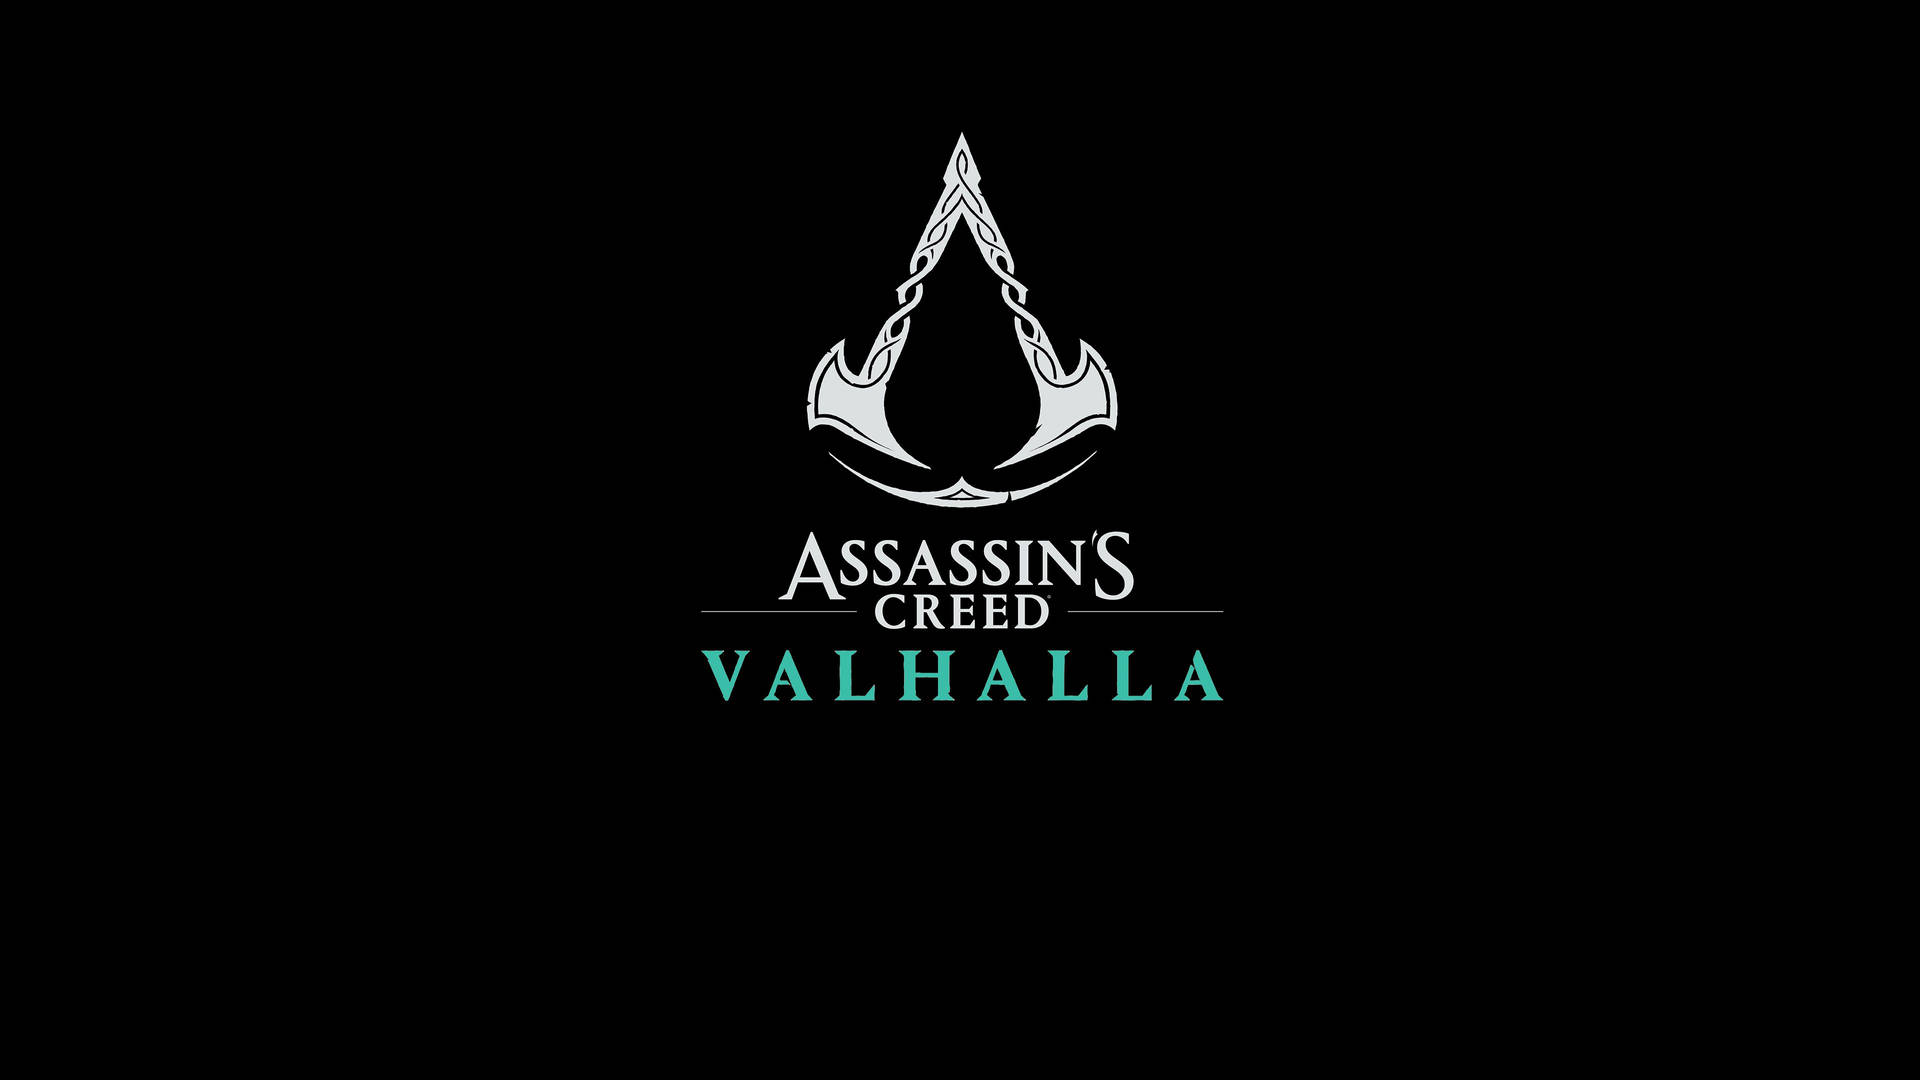 Acvalhalla Videospiel-logo Wallpaper